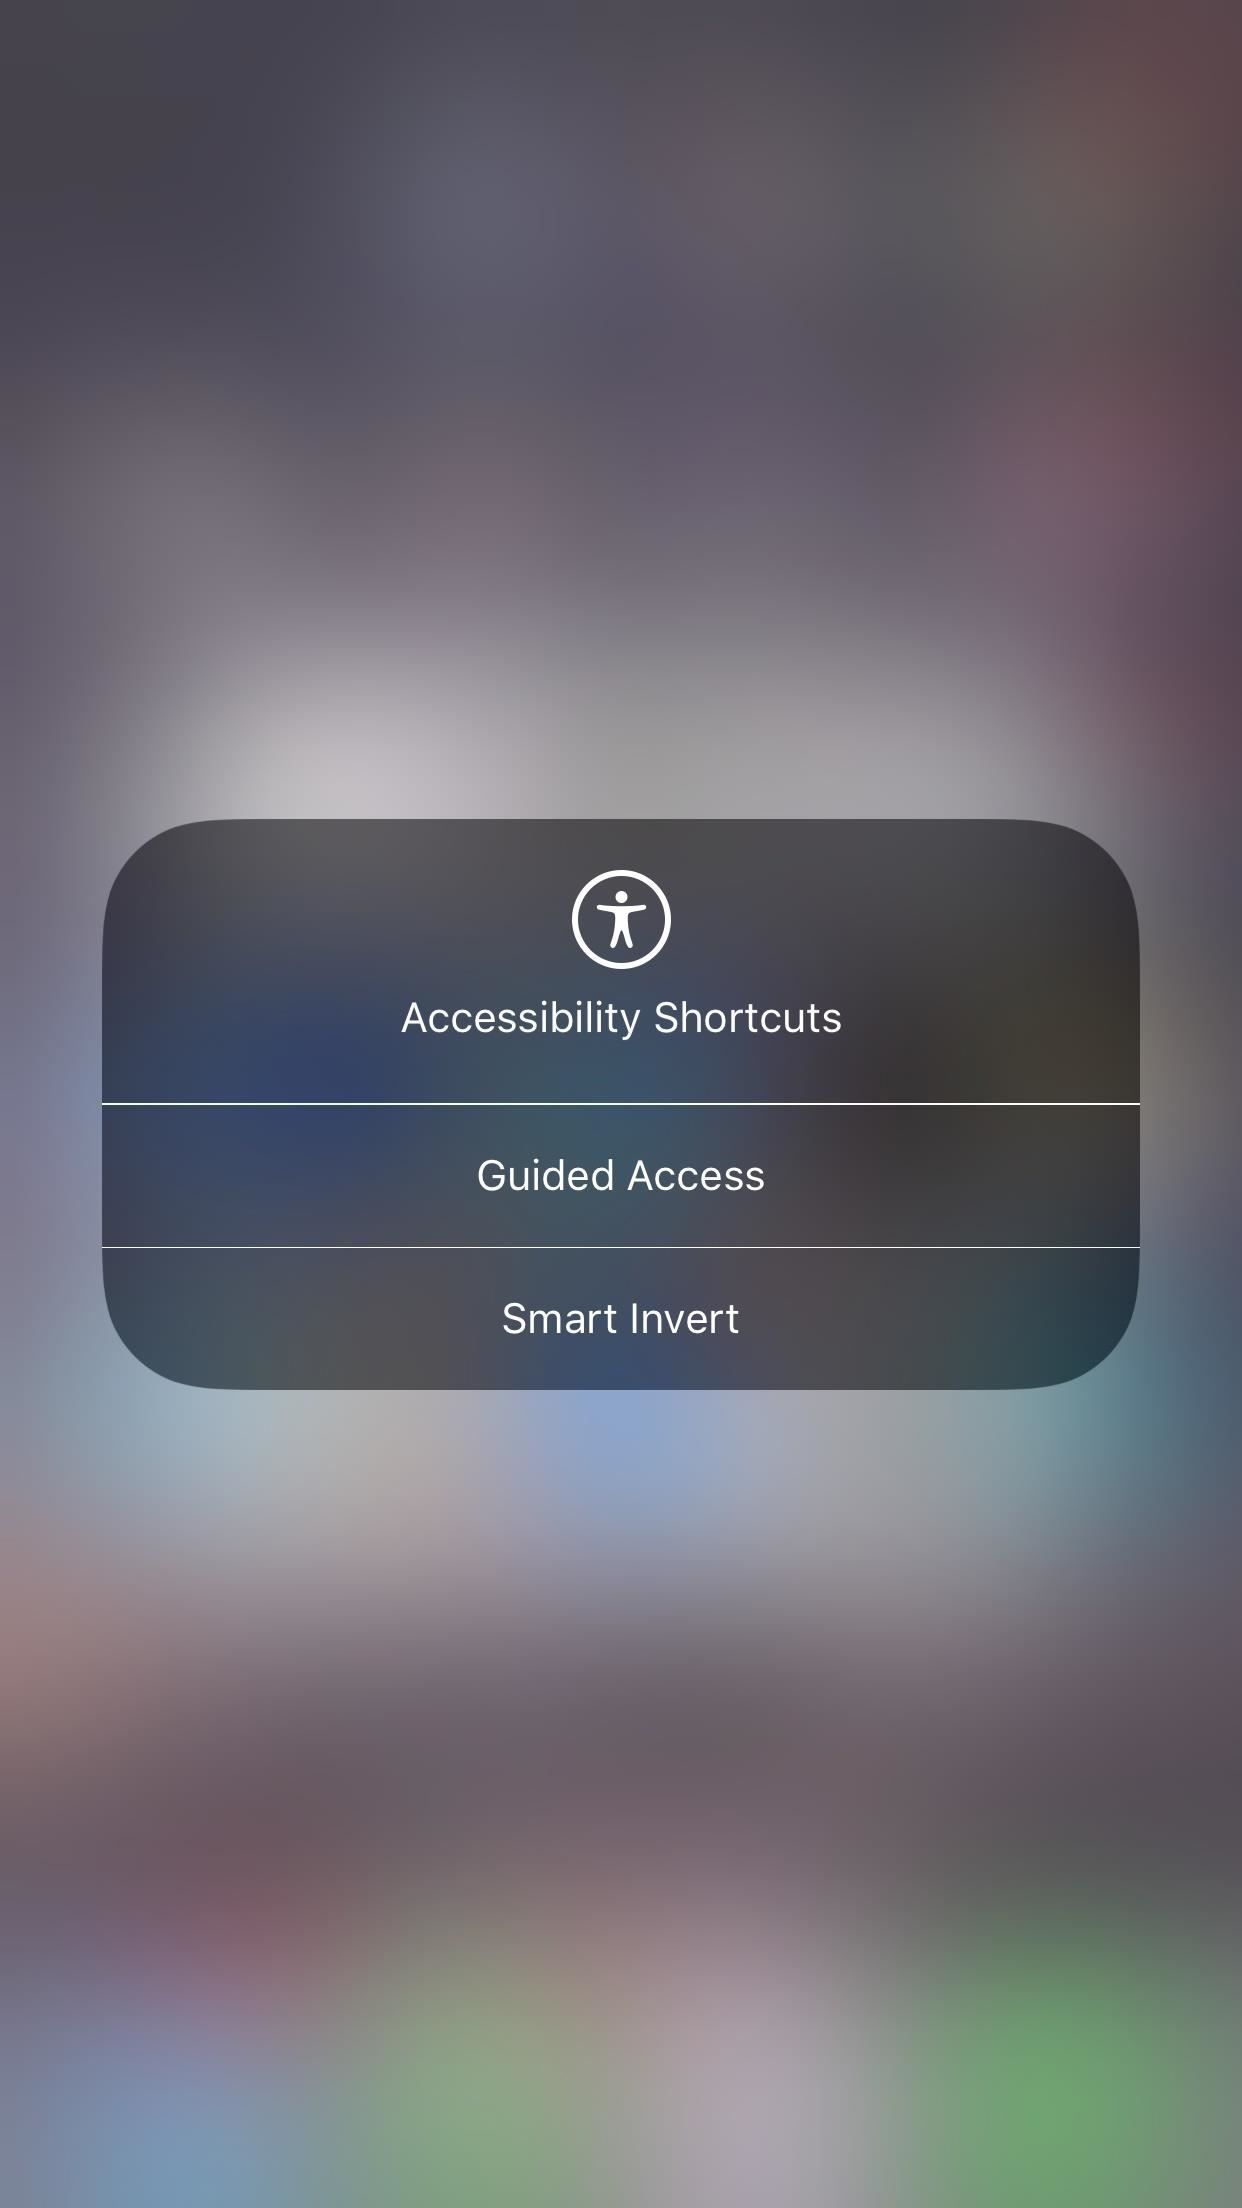 iOS 11 trás modo noturno finalmente ao iPhone, saiba como ativar 14